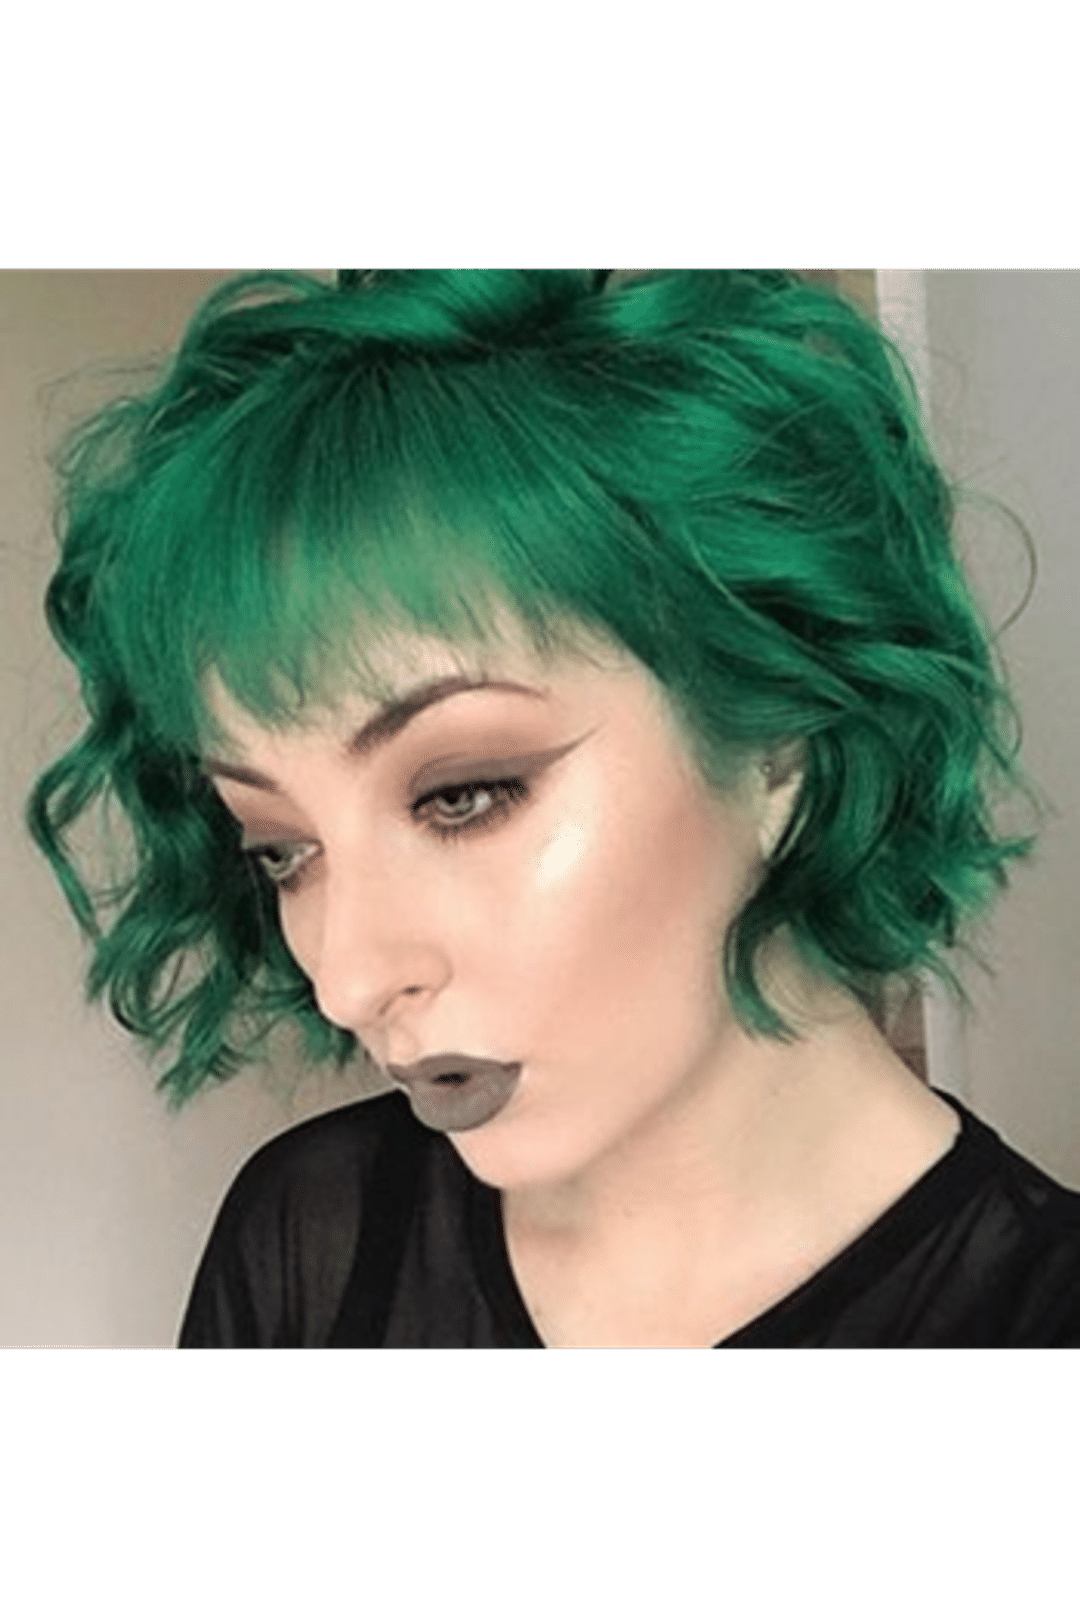 Crazy Color Semi Permanent Hair Color Cream - Pine Green